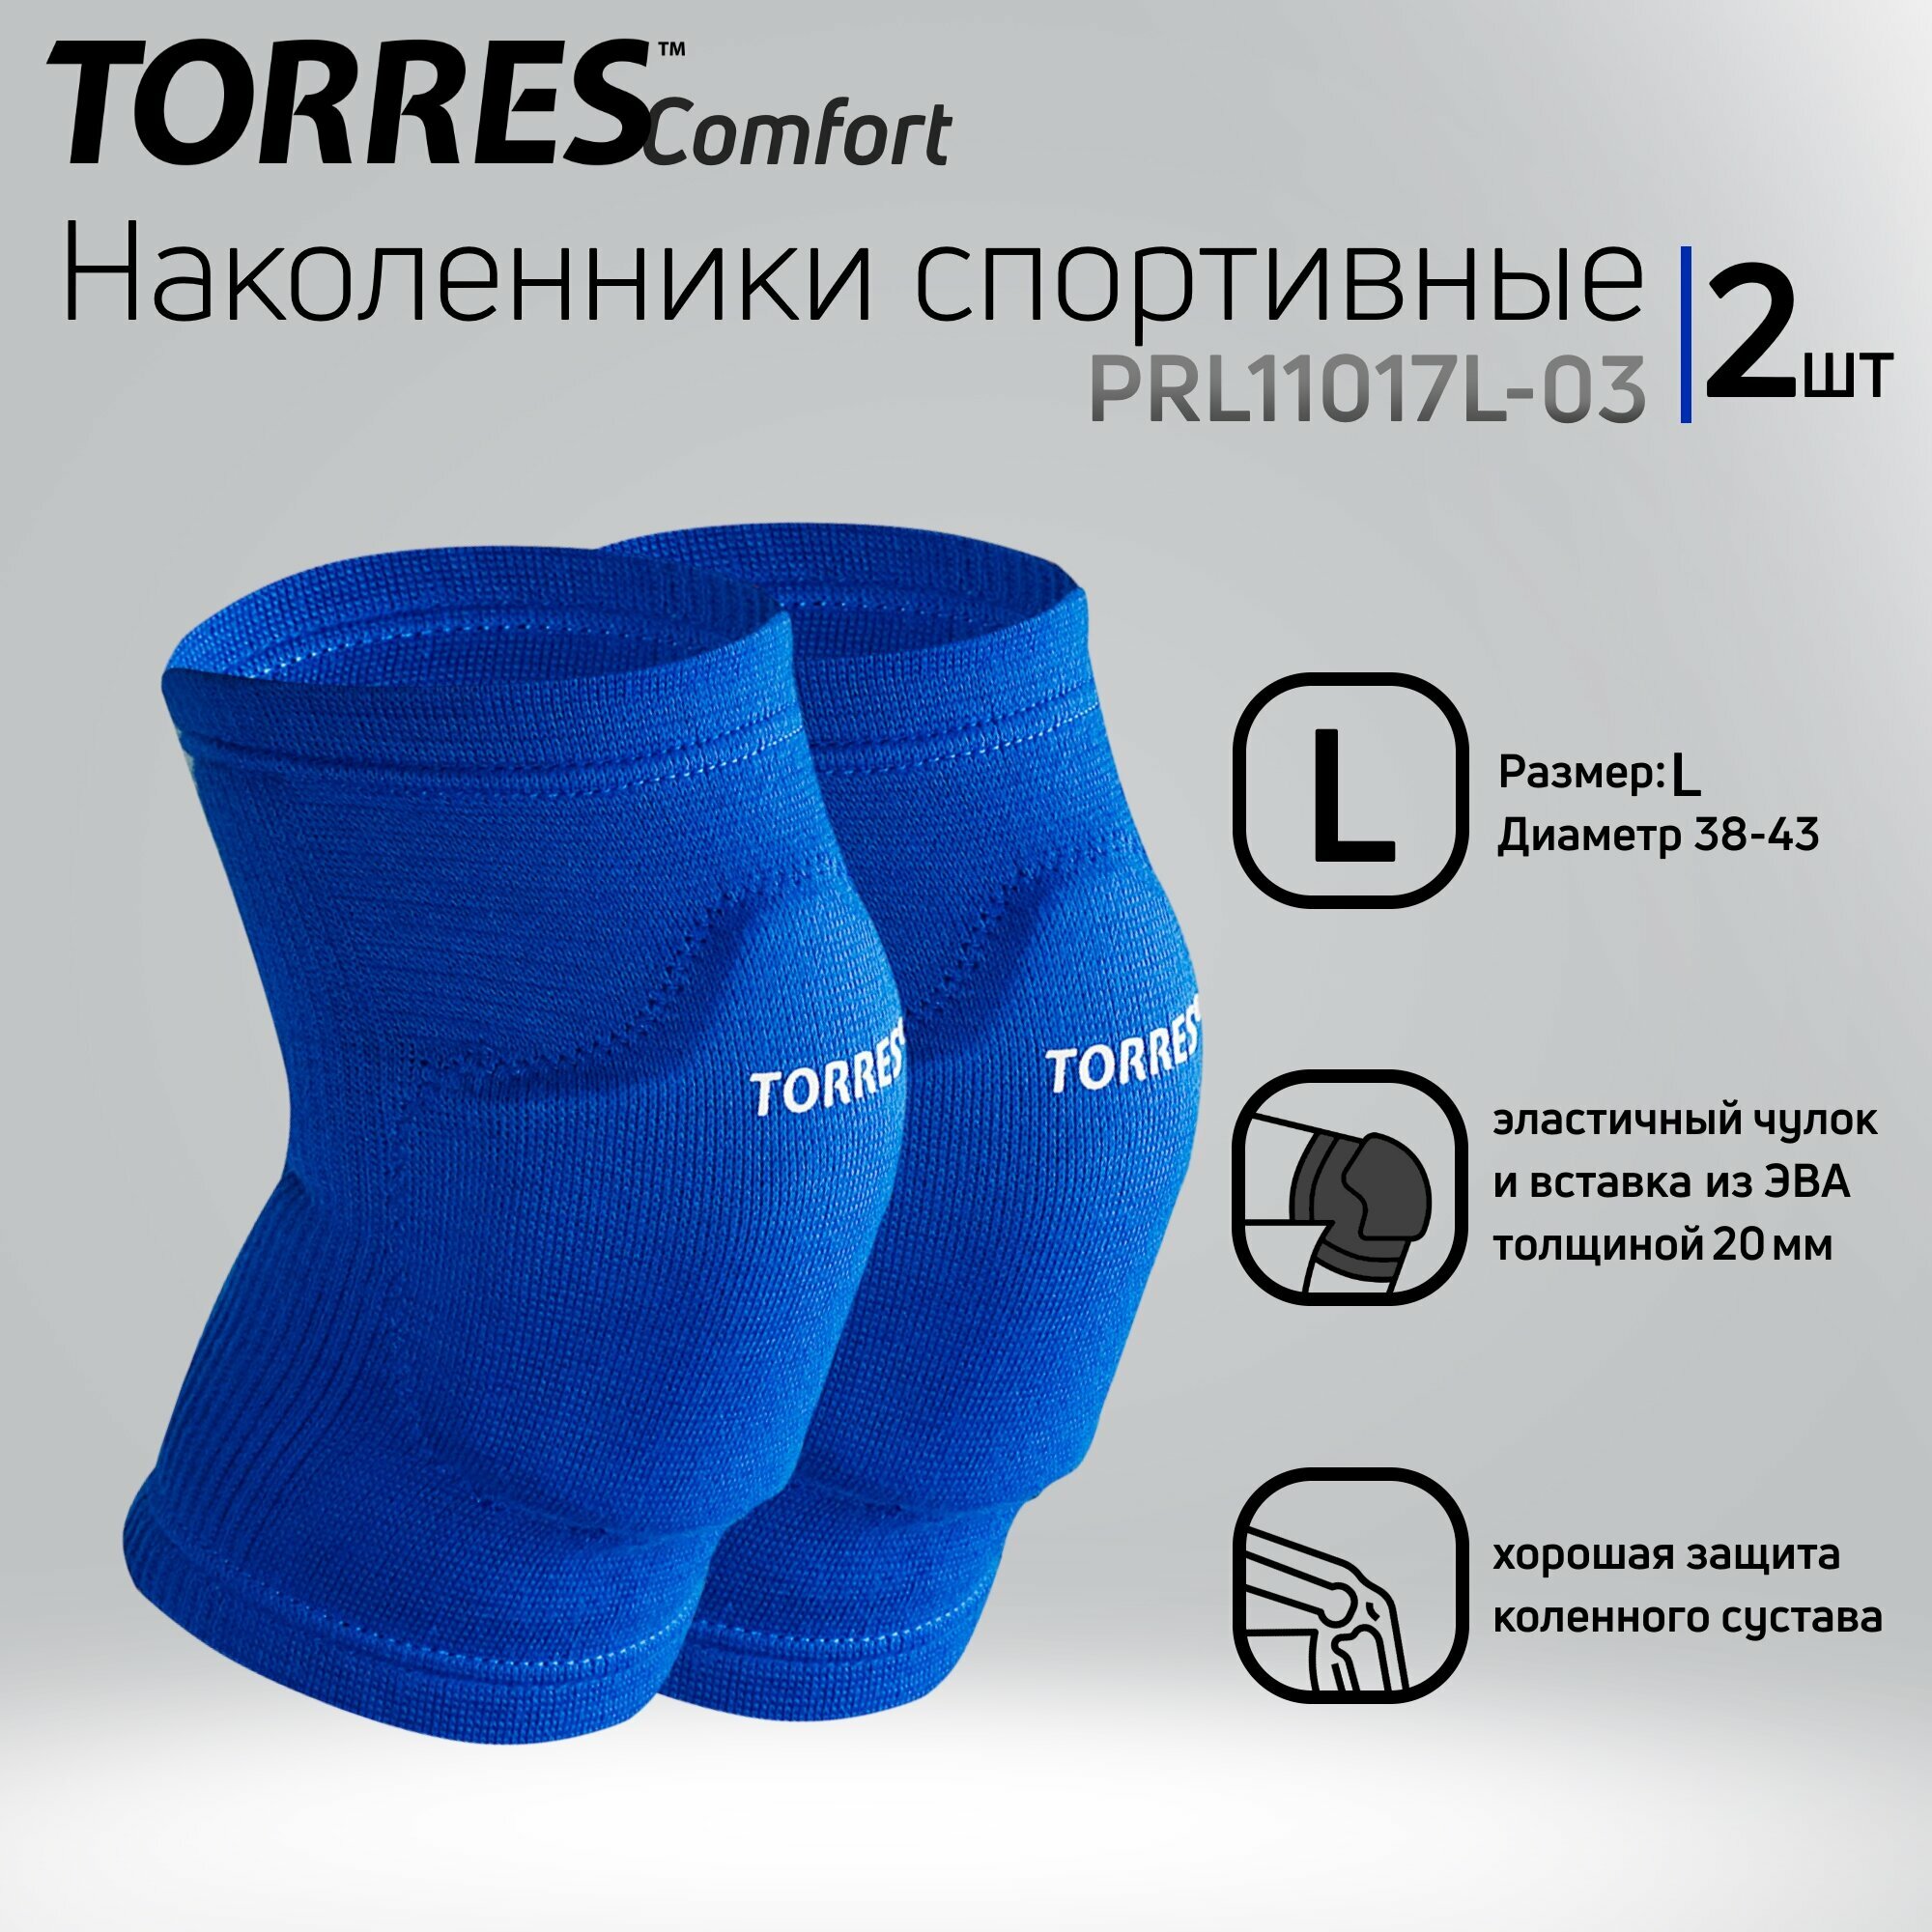 Наколенники спортивные "TORRES Comfort", синий,р.L, арт.PRL11017L-03, нейлон, ЭВА